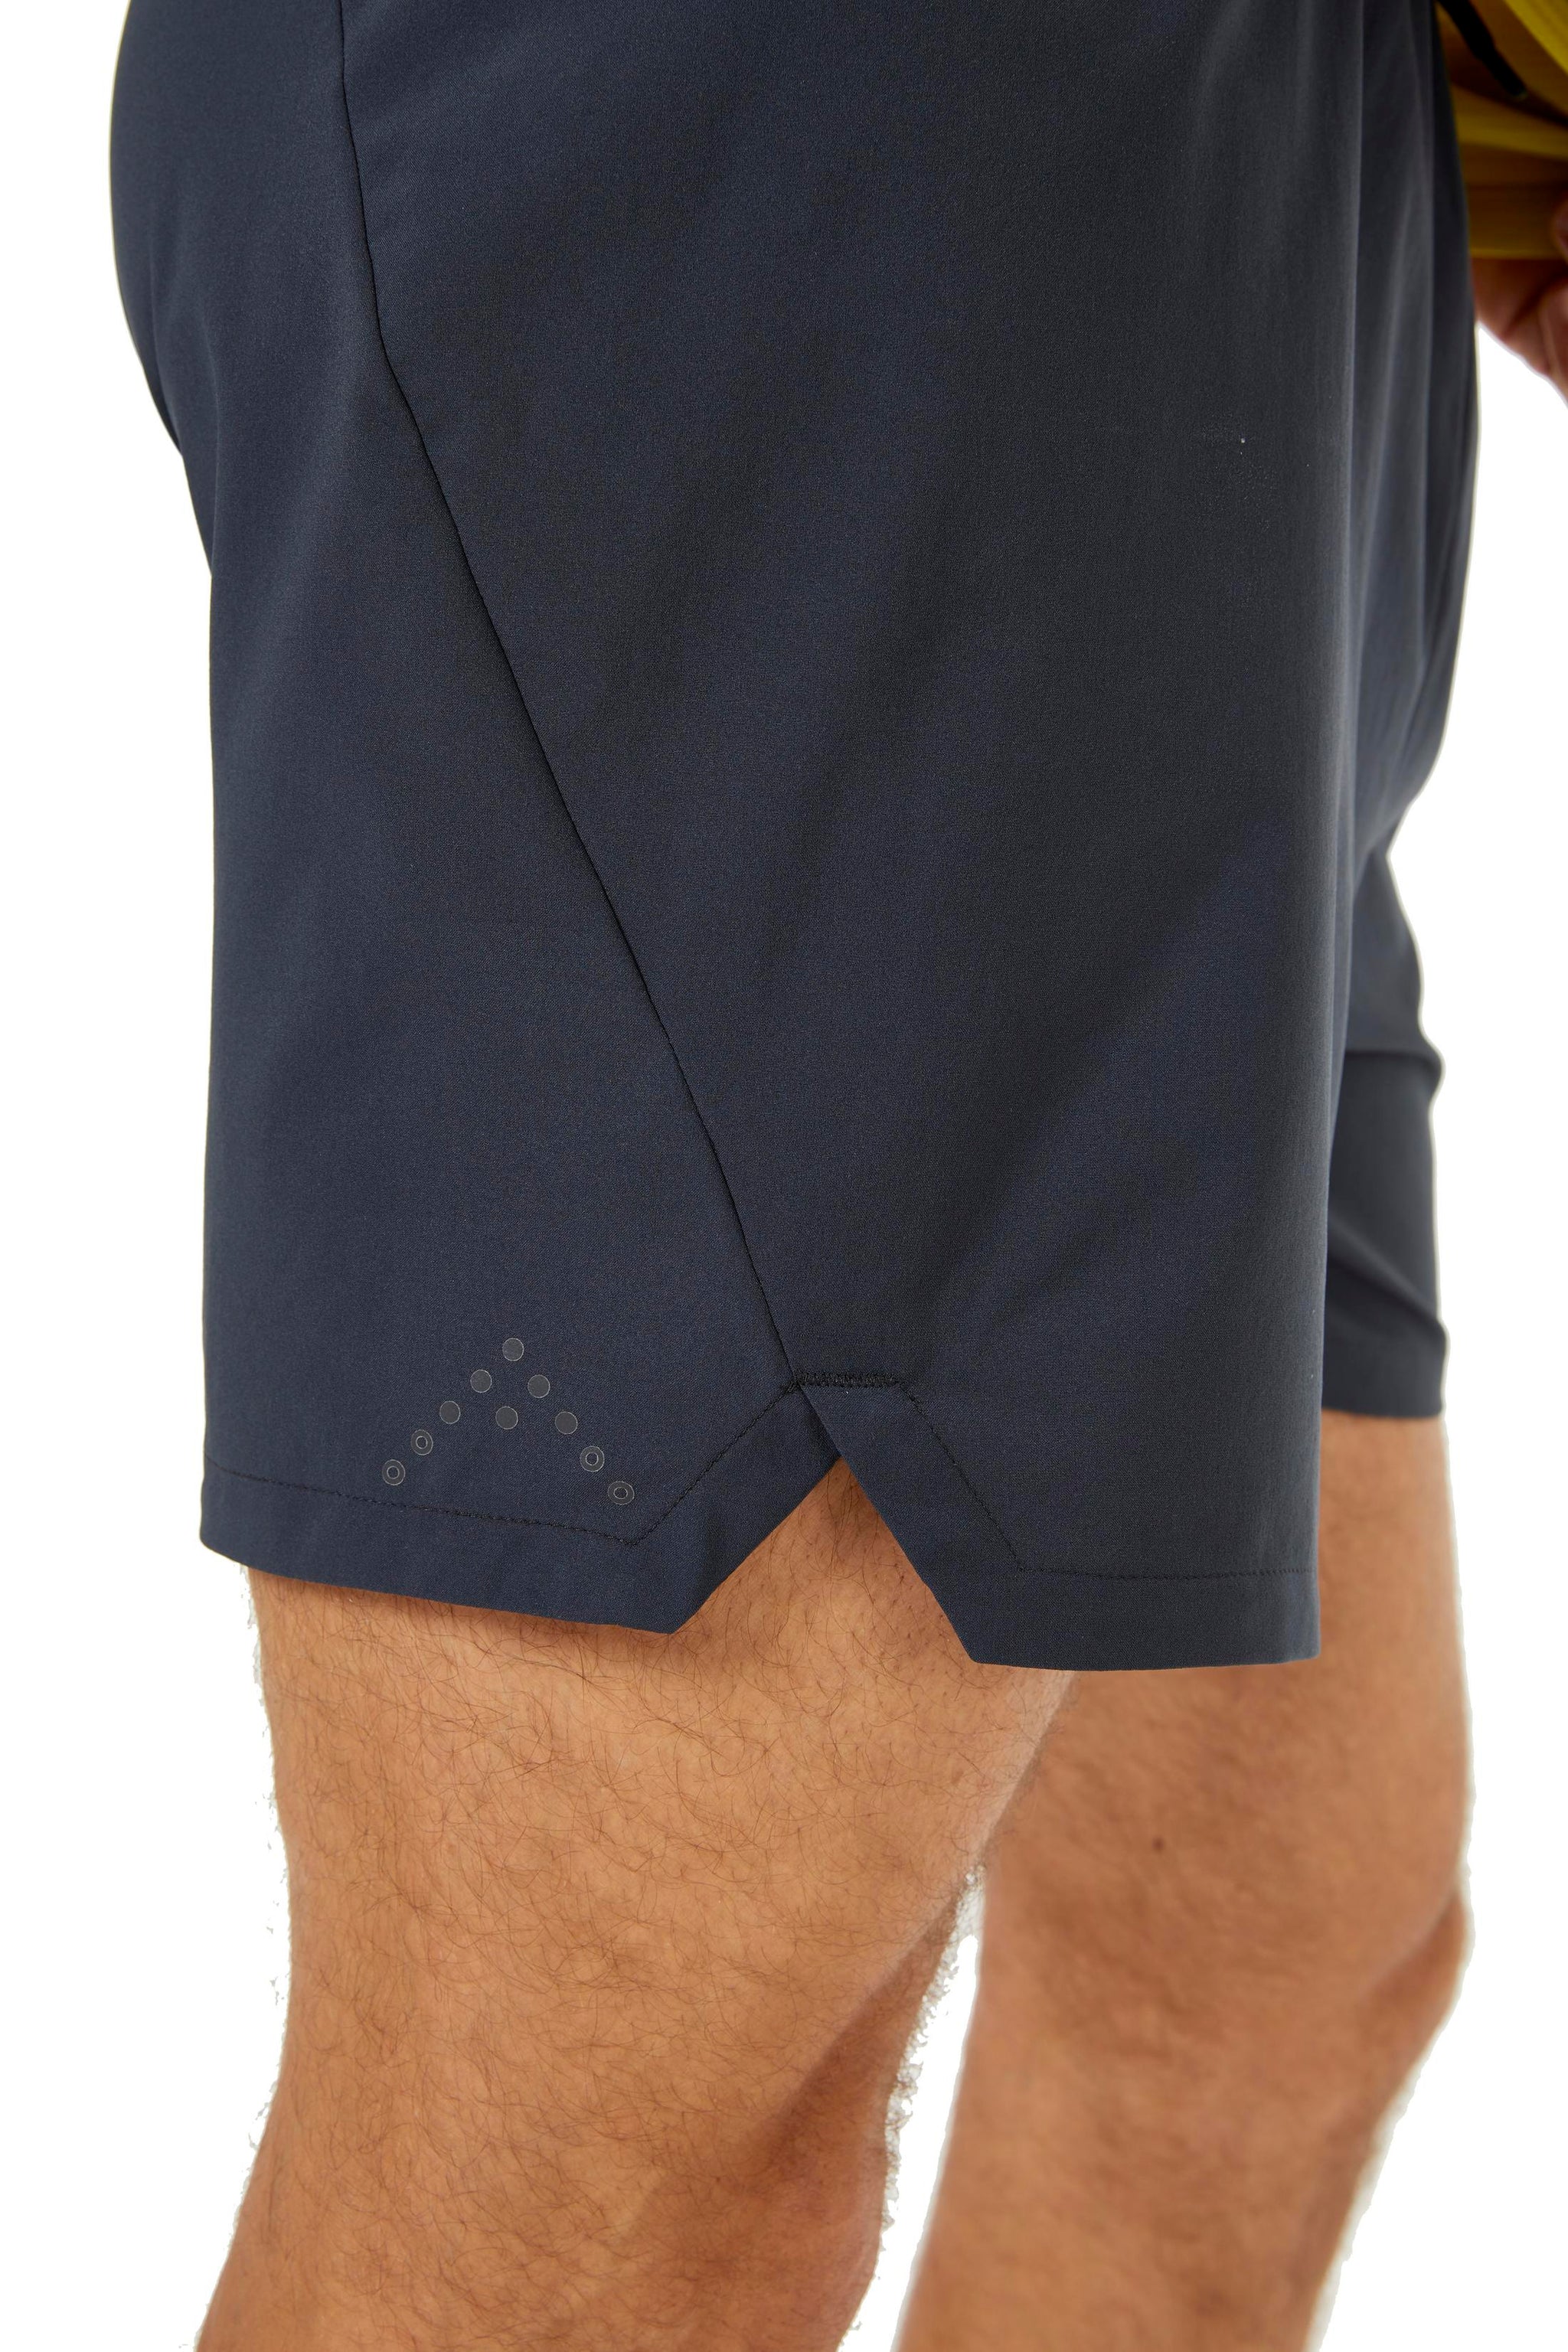 Rab - Talus Active Shorts - Men's